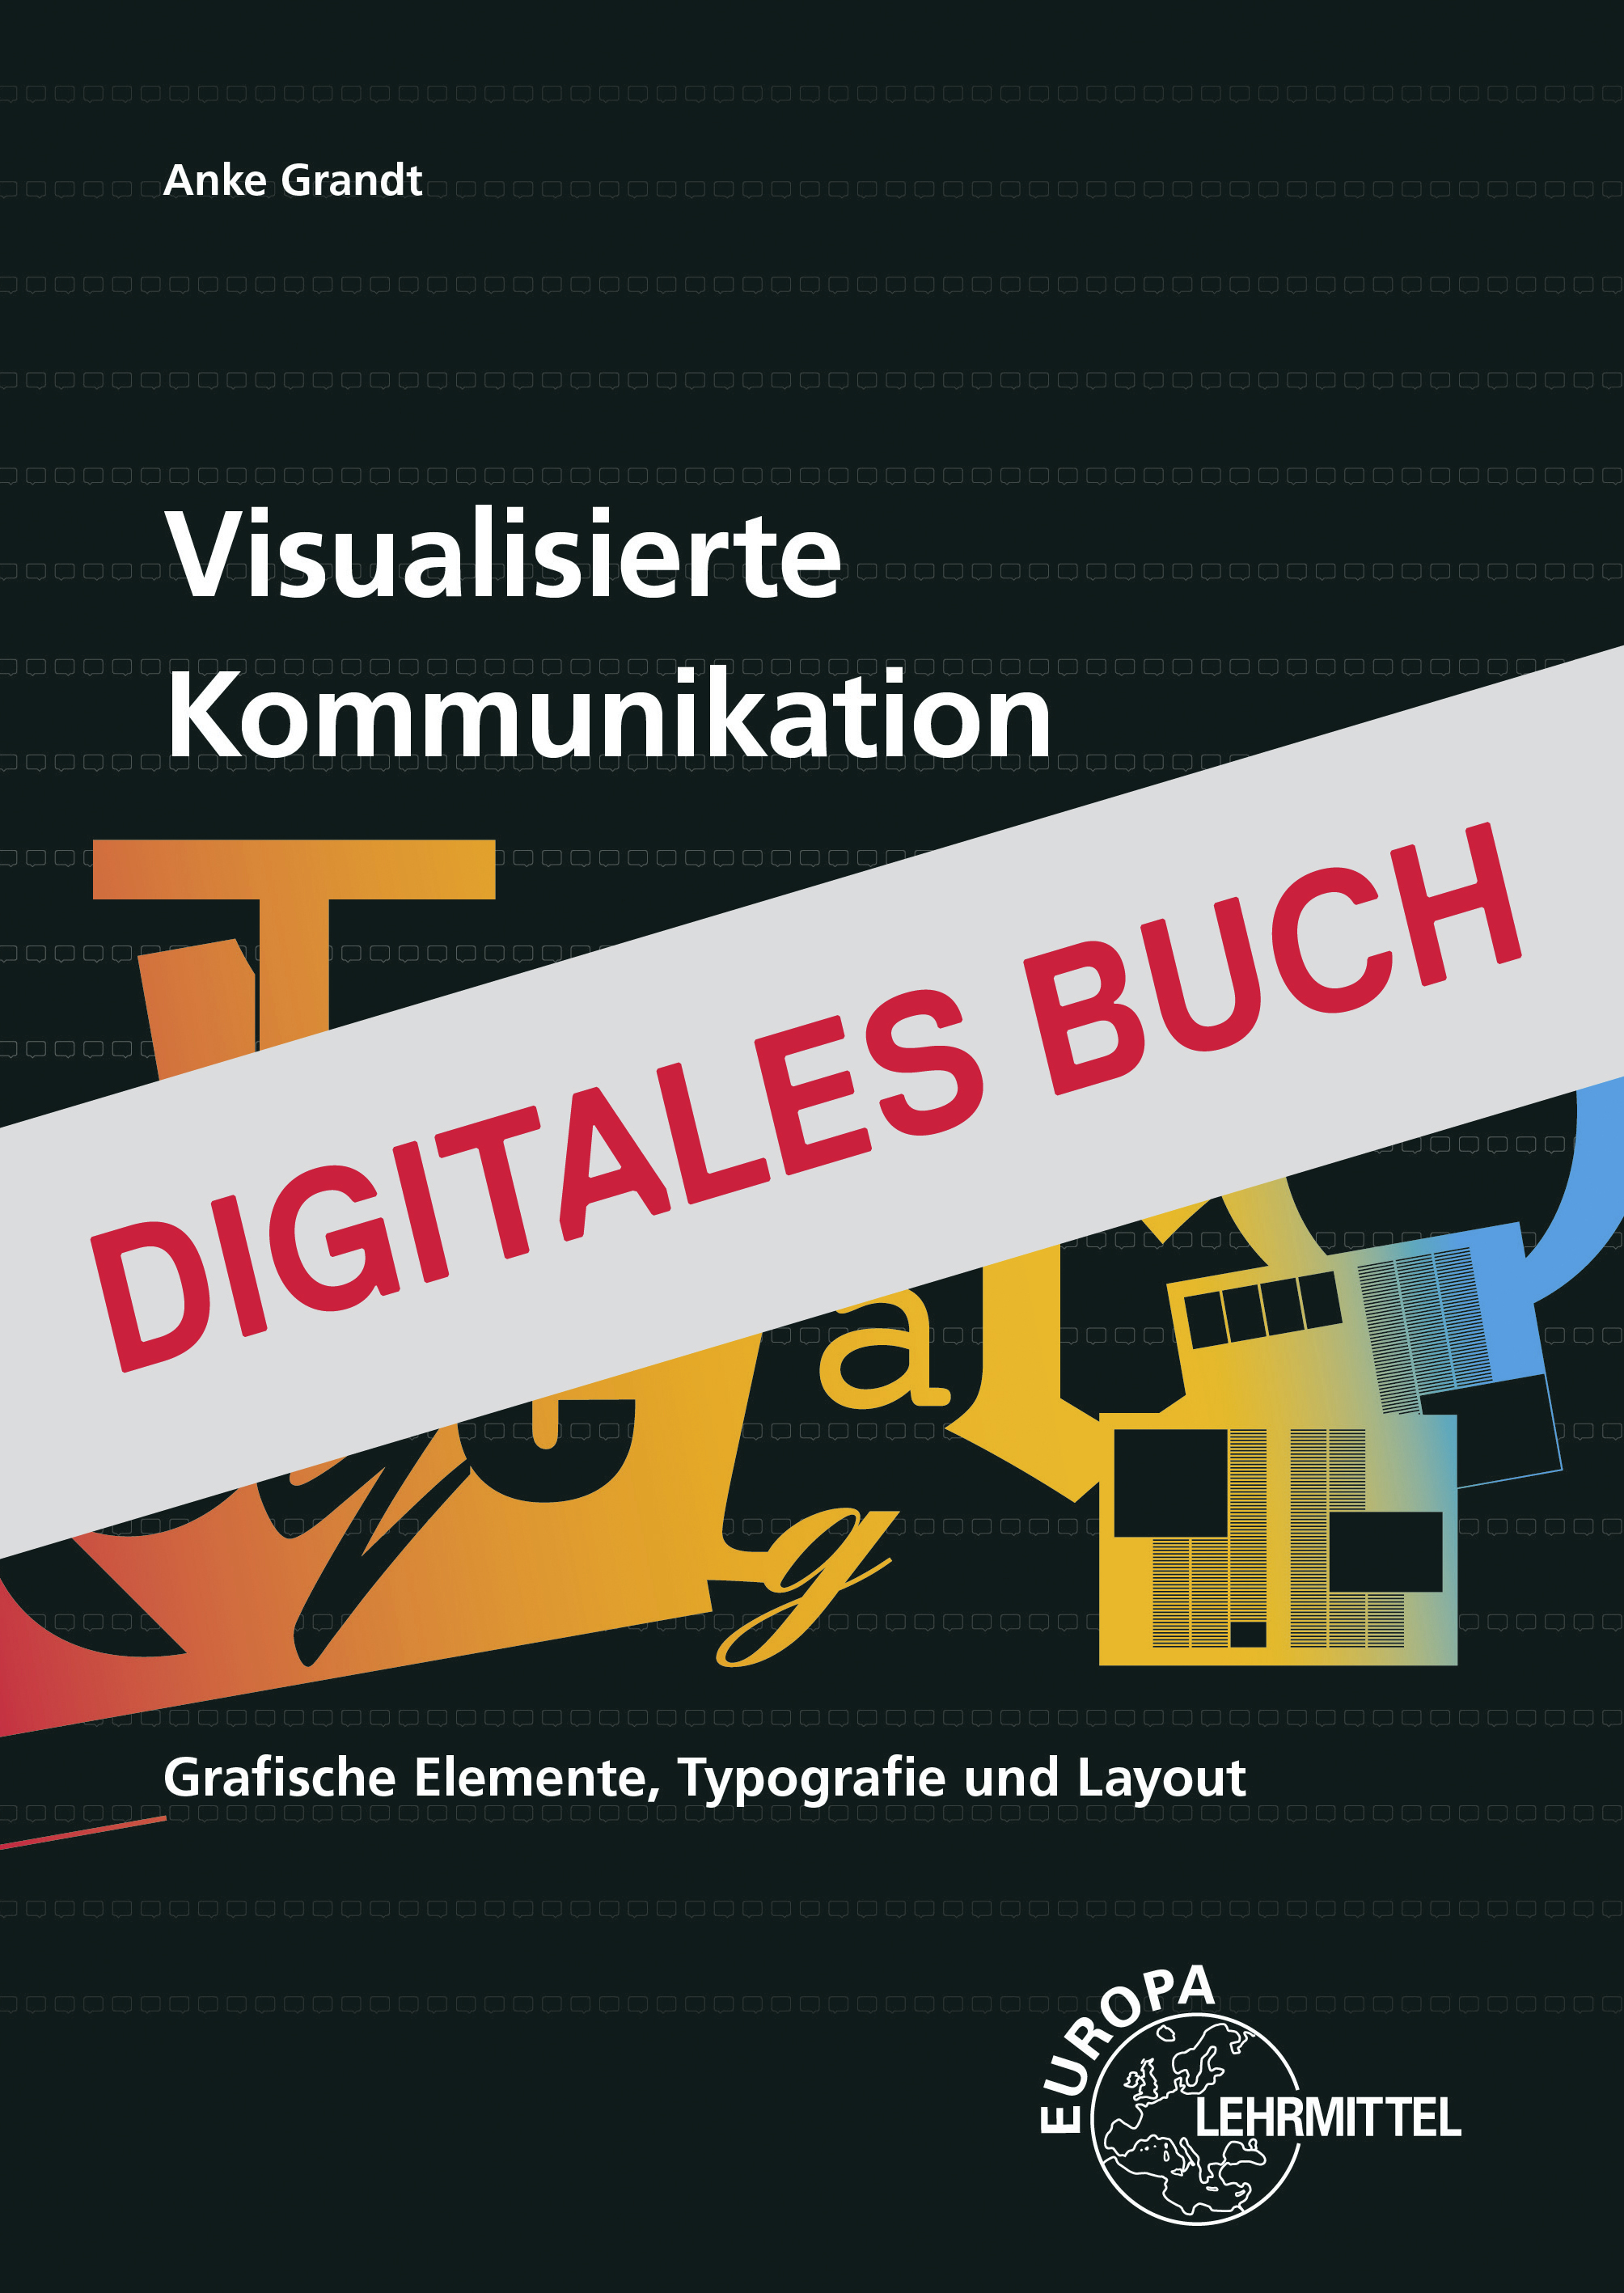 Visualisierte Kommunikation - Digitales Buch